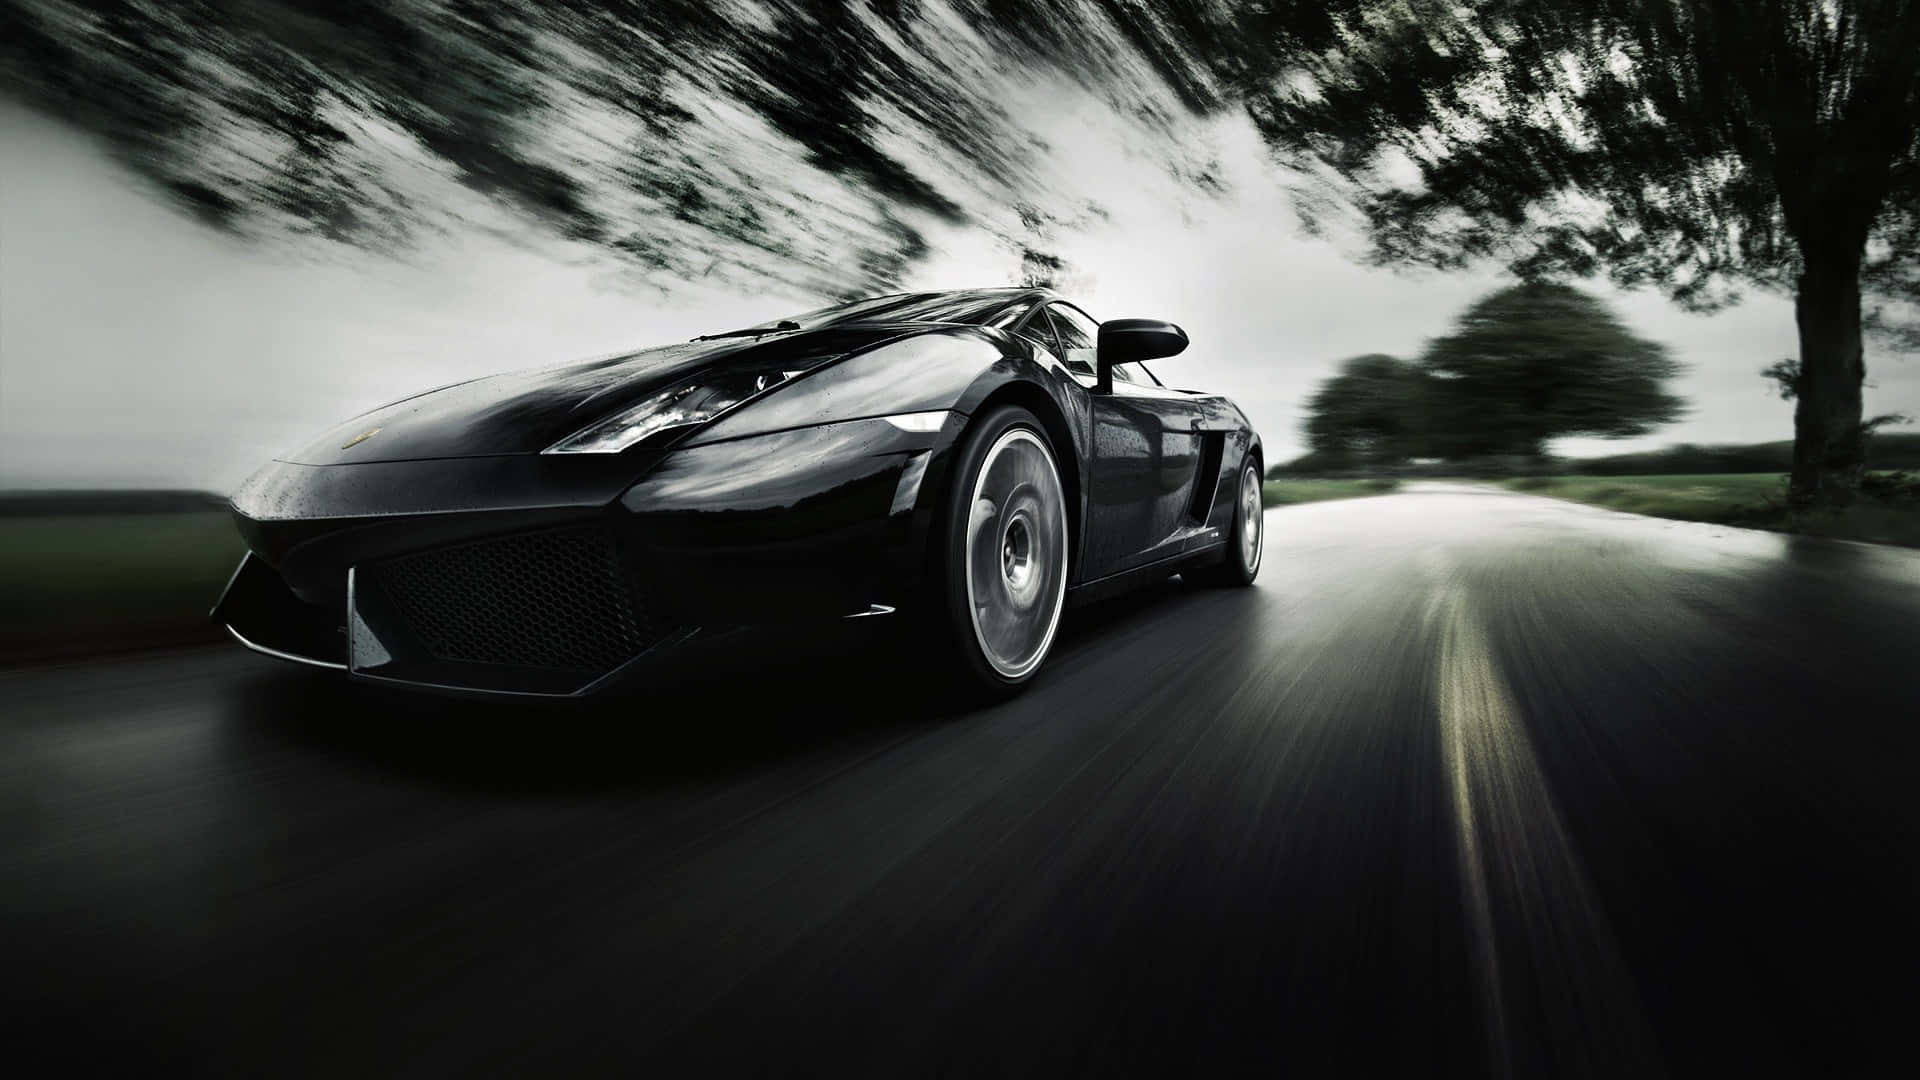 Caption: The Eye-Catching Lamborghini Gallardo in Action Wallpaper